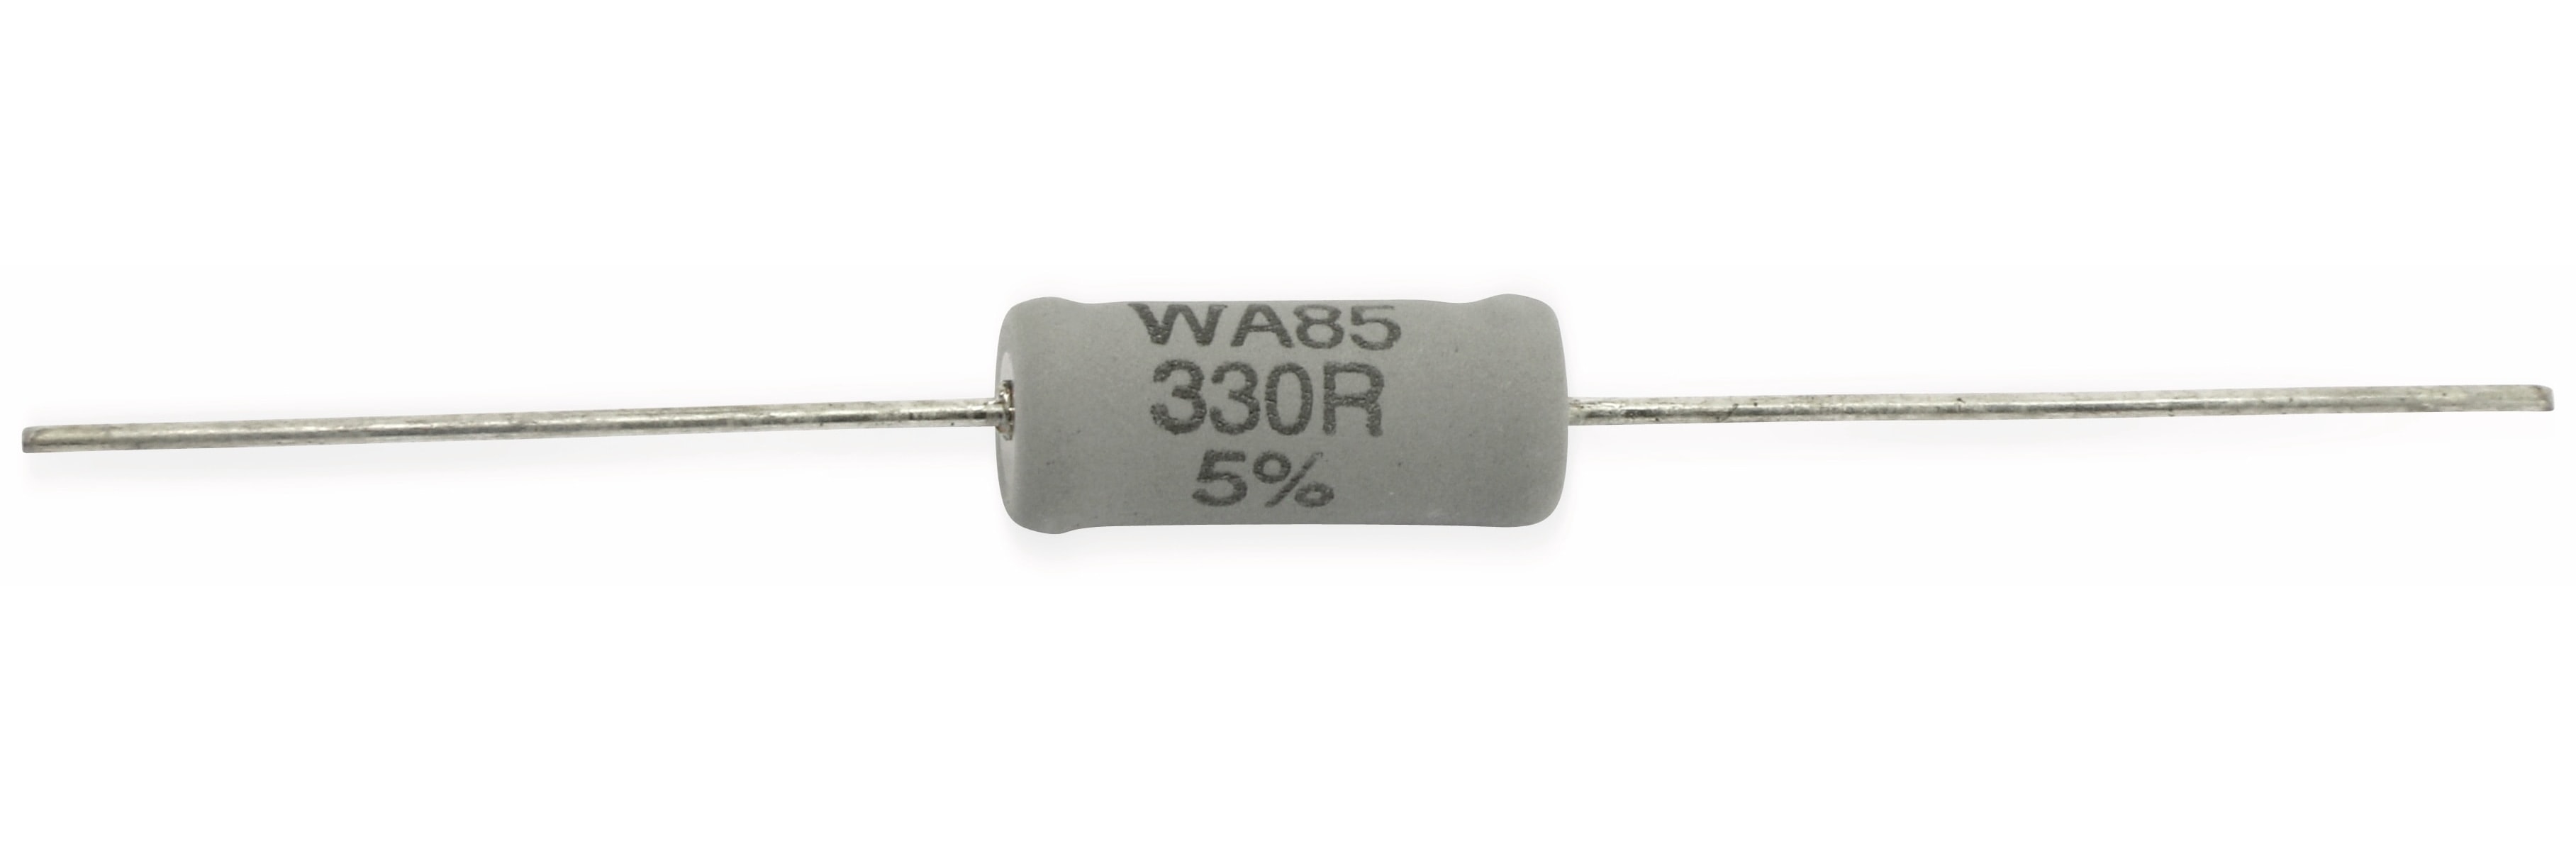 WELWYN Draht-Widerstand WA85-330RJI, 5 W, 330 R, 5 %